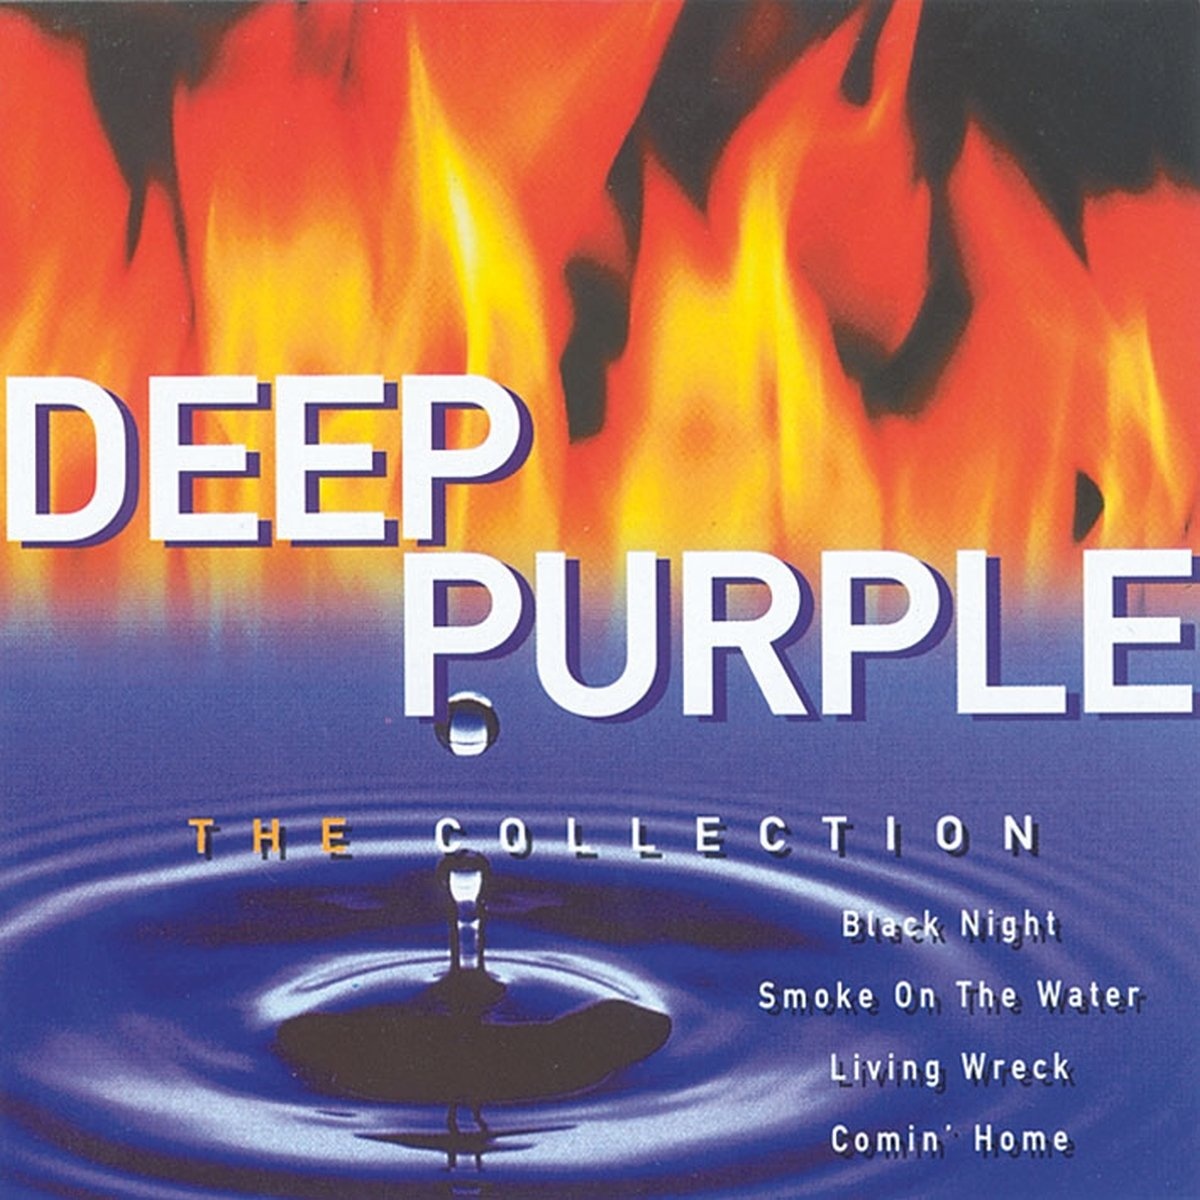 Deep collection. Deep Purple обложки. Deep Purple обложки альбомов. Deep Purple the collection. Обложка диска Deep Purple.